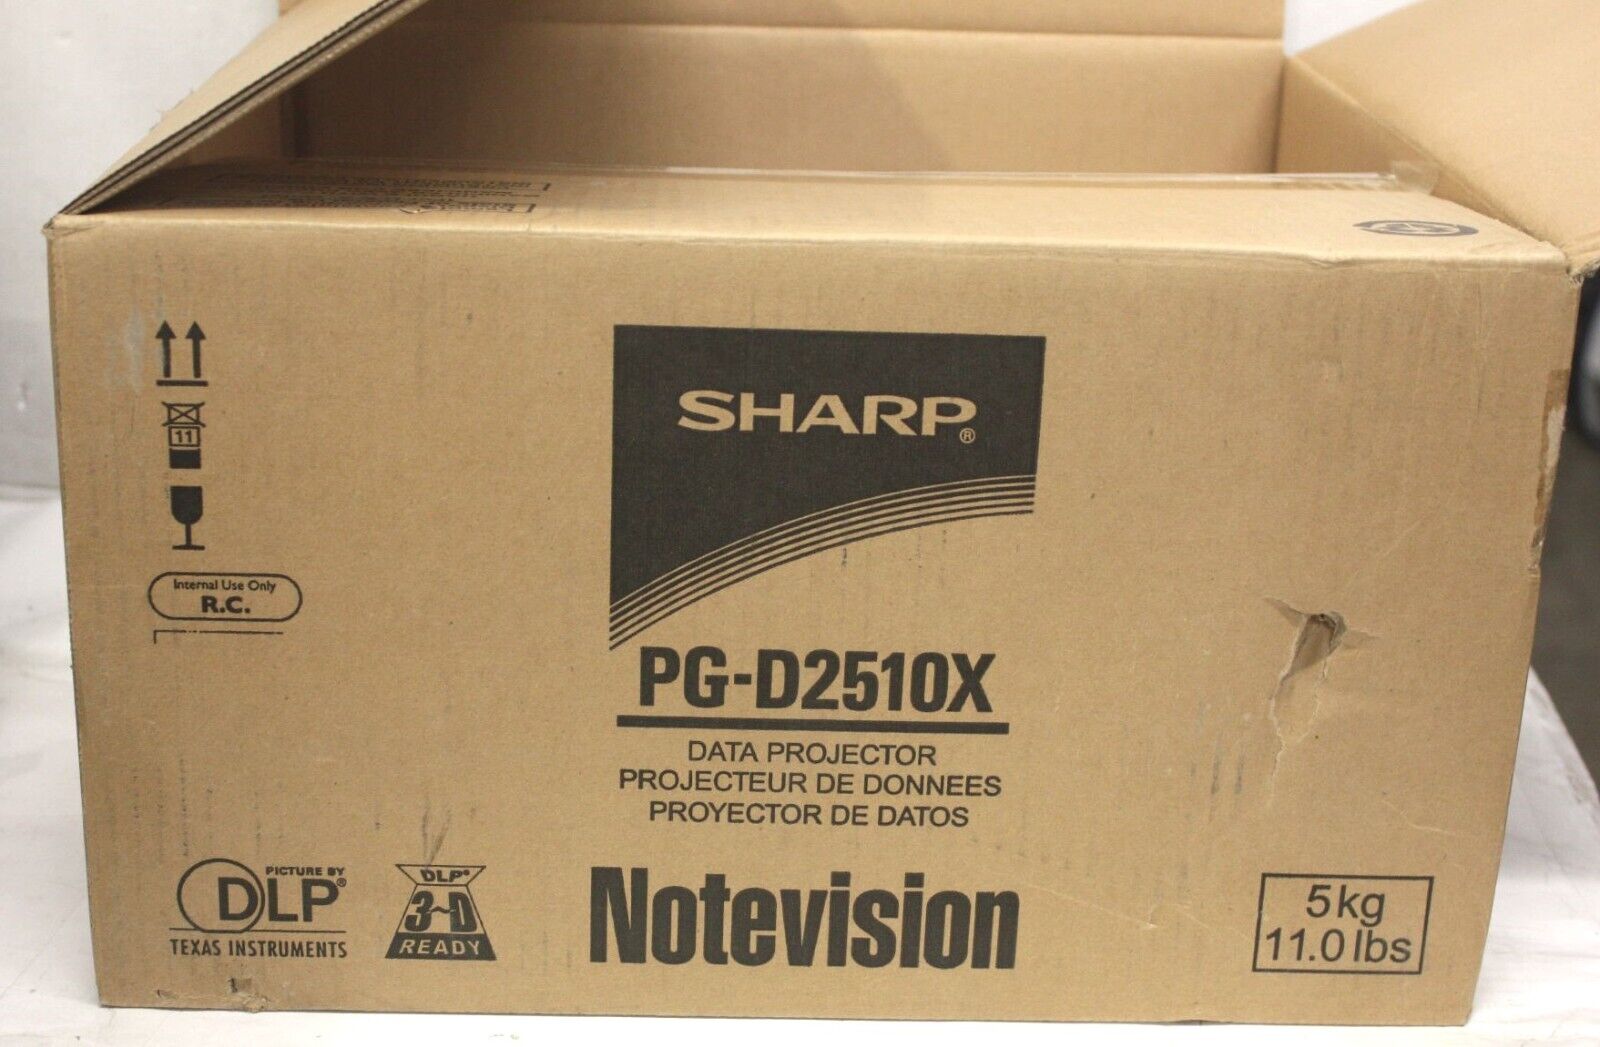 New In Box * Sharp Notevision PG-D2510X Projector * XGA